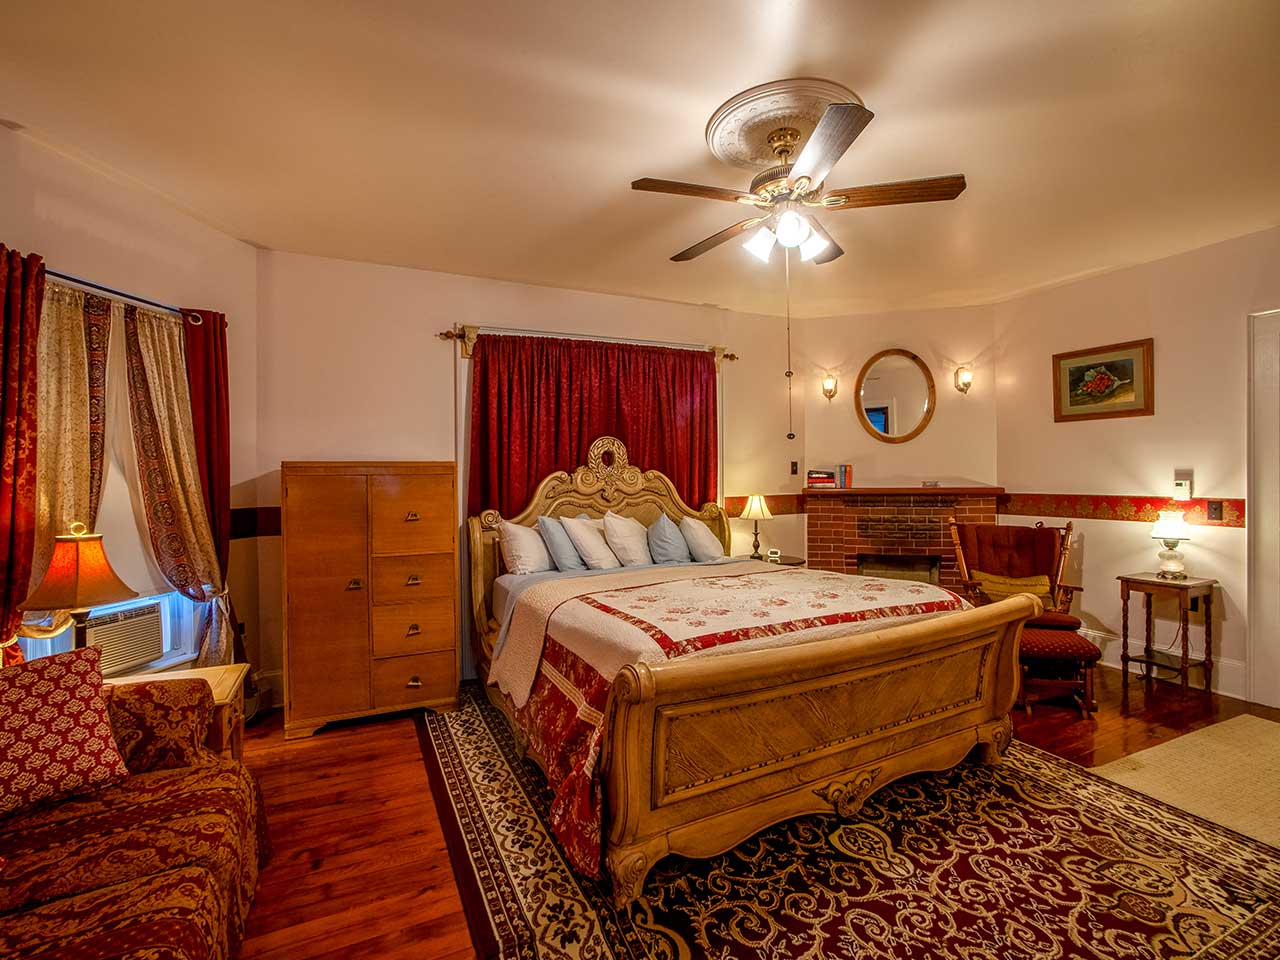 Hickory Suite Bedroom - Inn on Maple Street, Port Allegany, PA